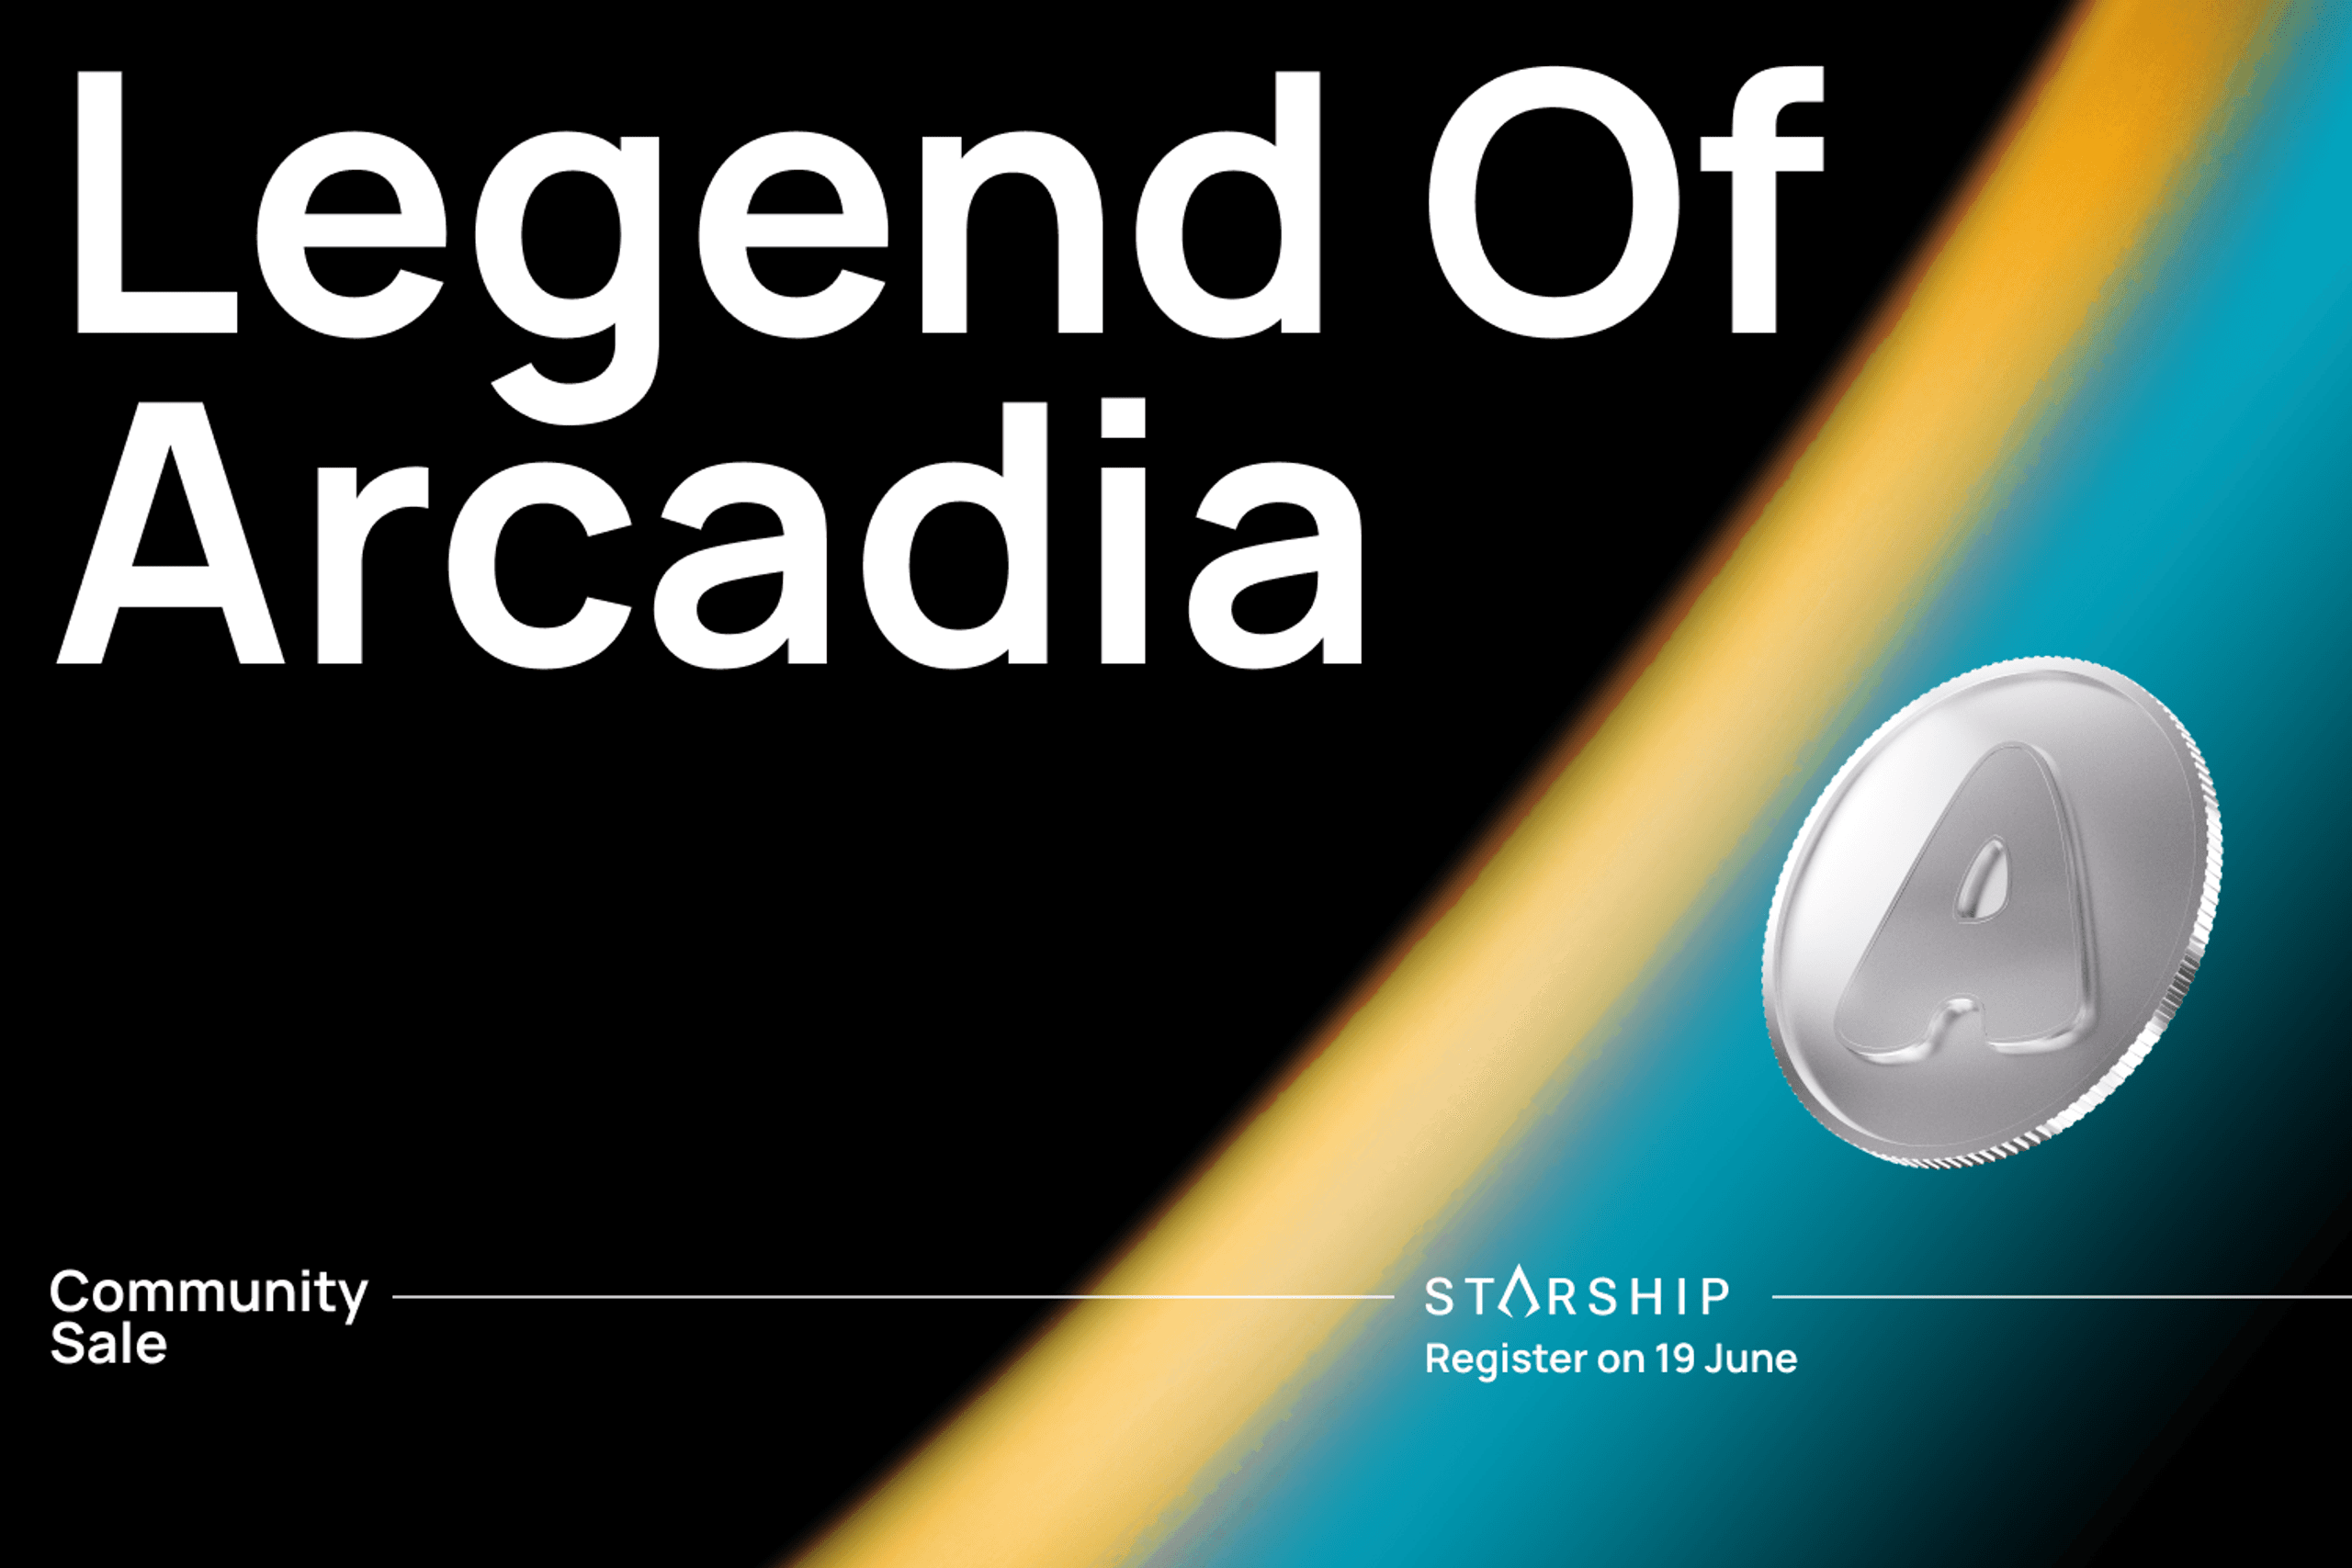 Announcing Legend of Arcadia Community Sale on Starship